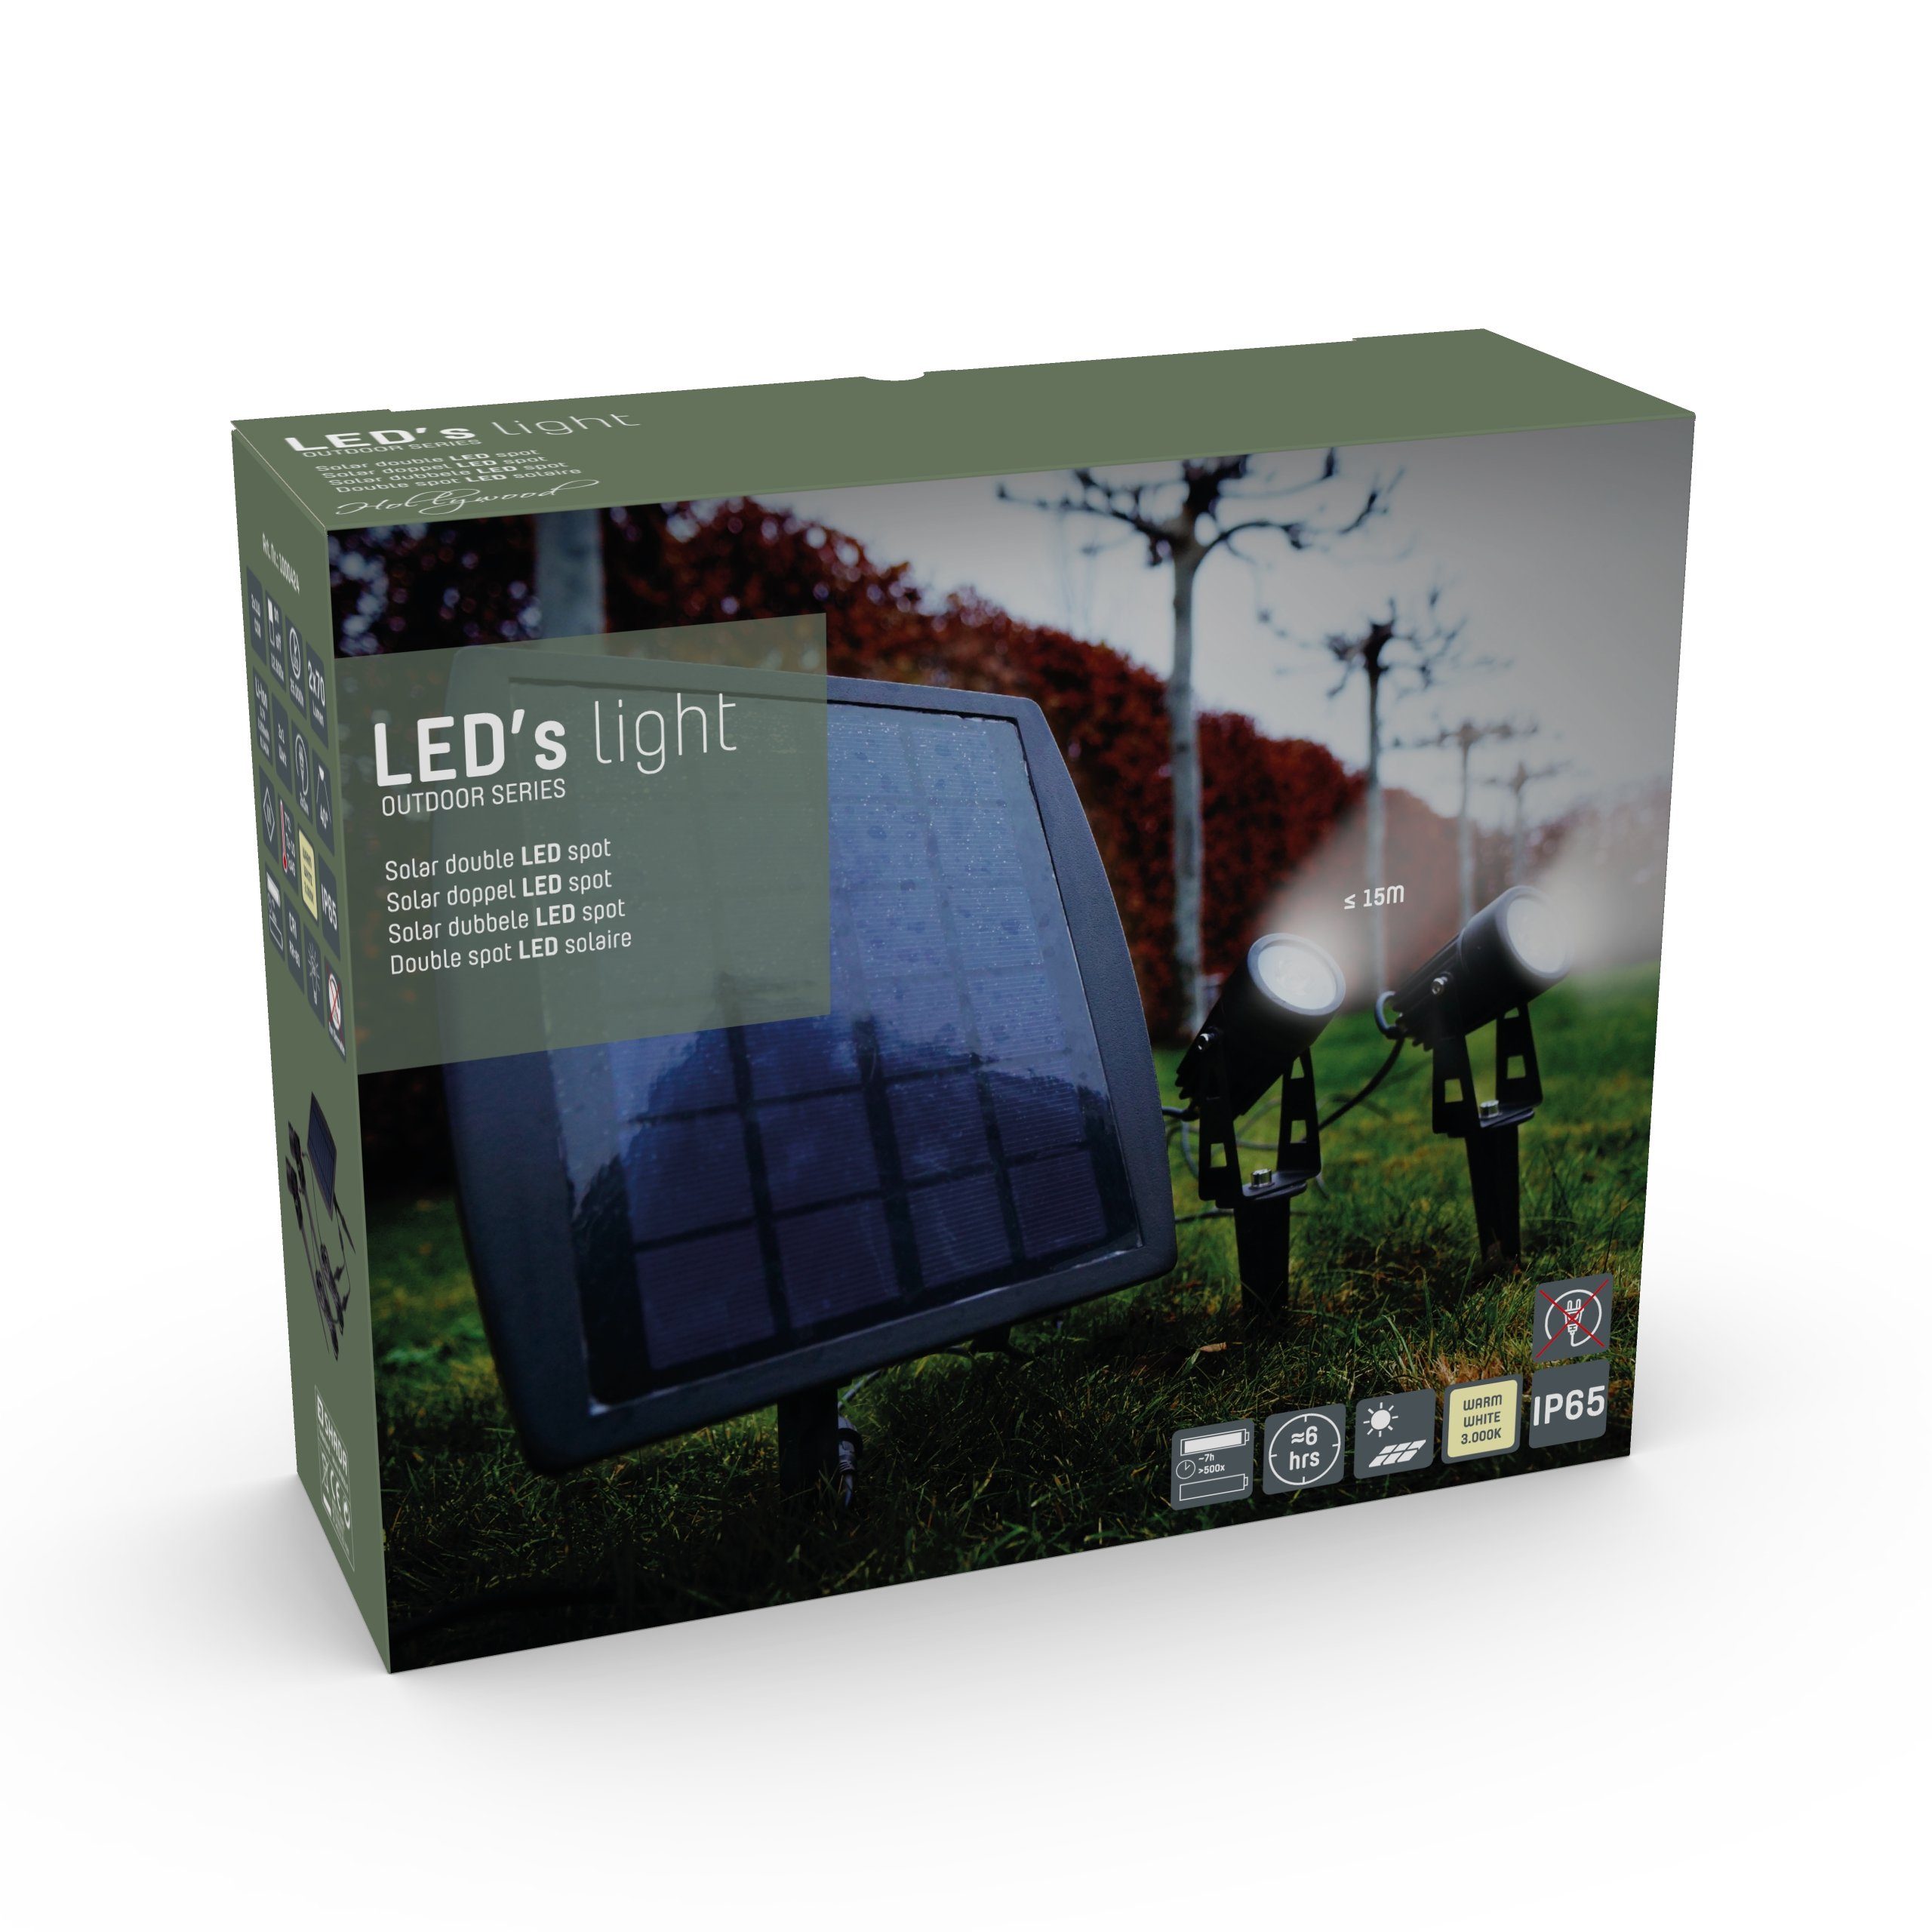 LED's light LED Solarleuchte 1000424 warmweiß 1,5W LED-Gartenspots, Solar LED